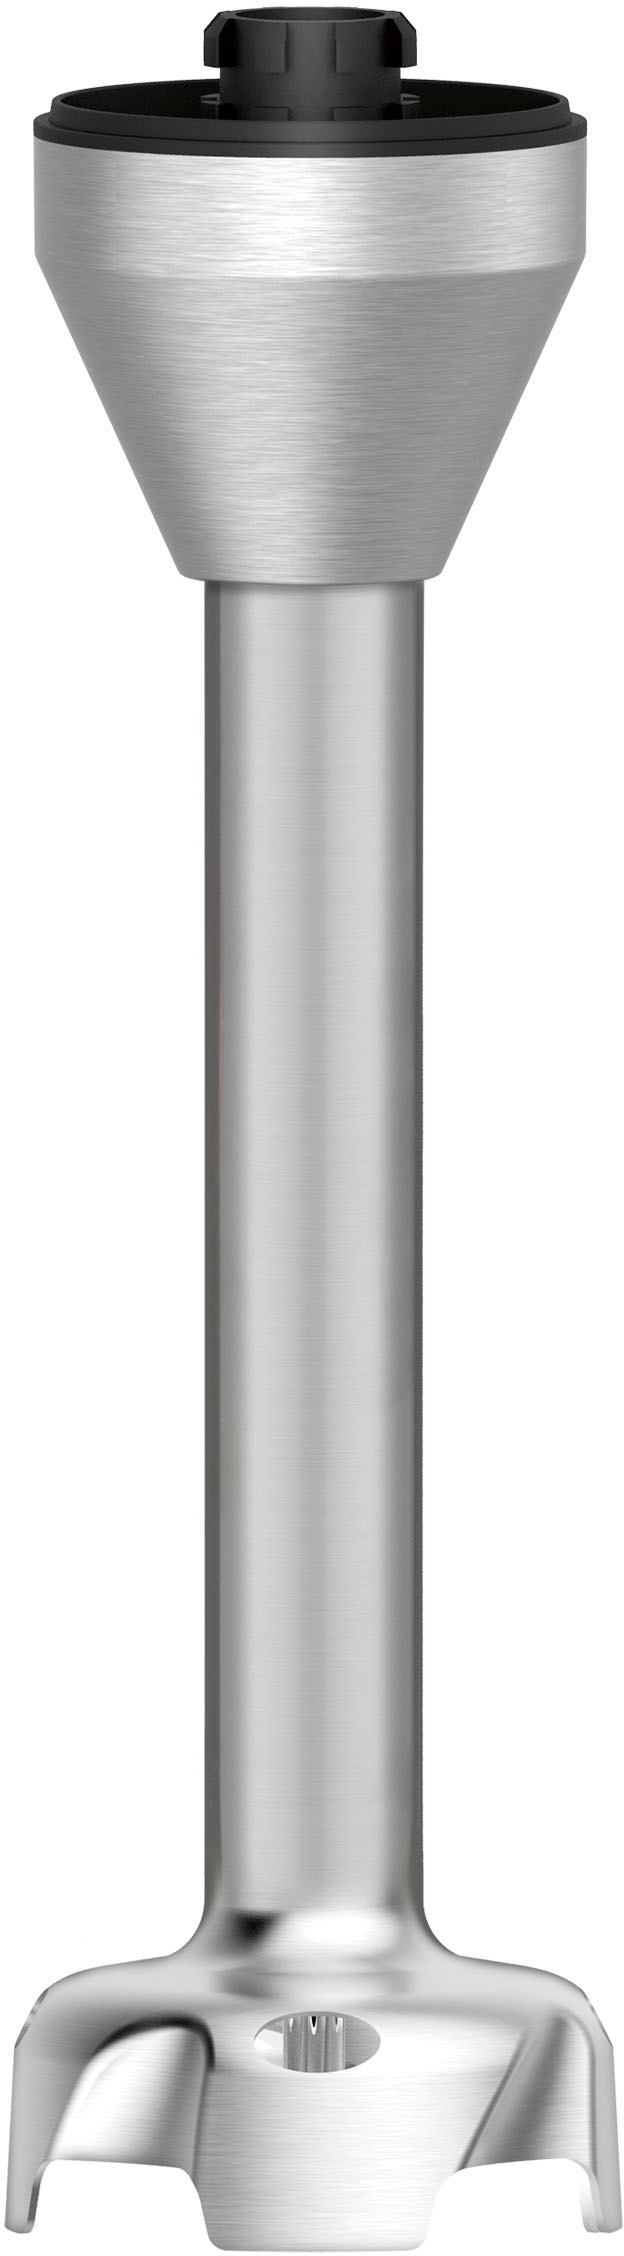 Best Buy: Cuisinart Smart Stick Variable Speed Hand Blender Silver CSB-179